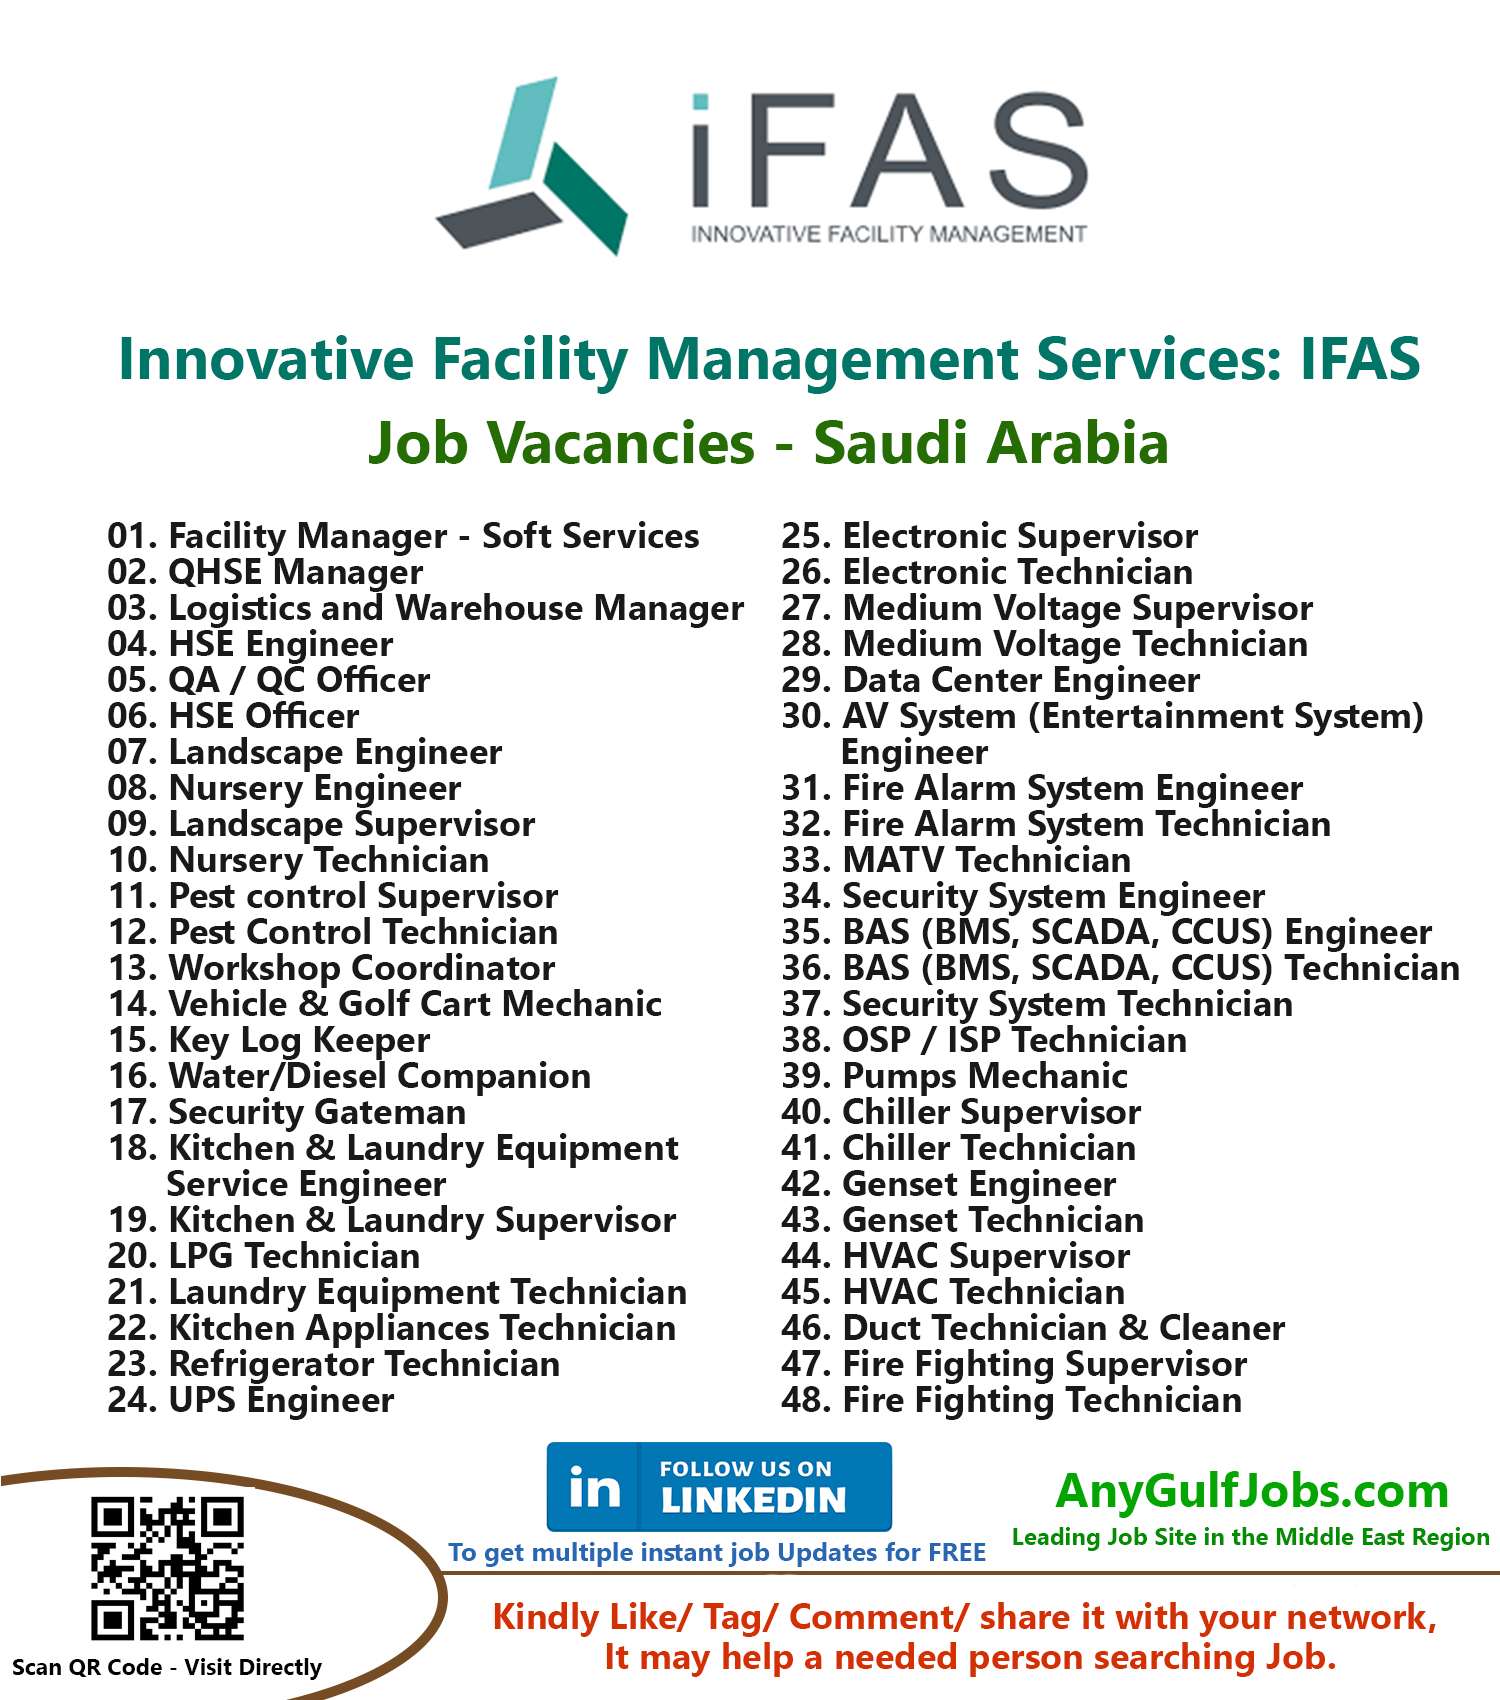 Innovative Facility Management Services: IFAS Job Vacancies - Saudi Arabia